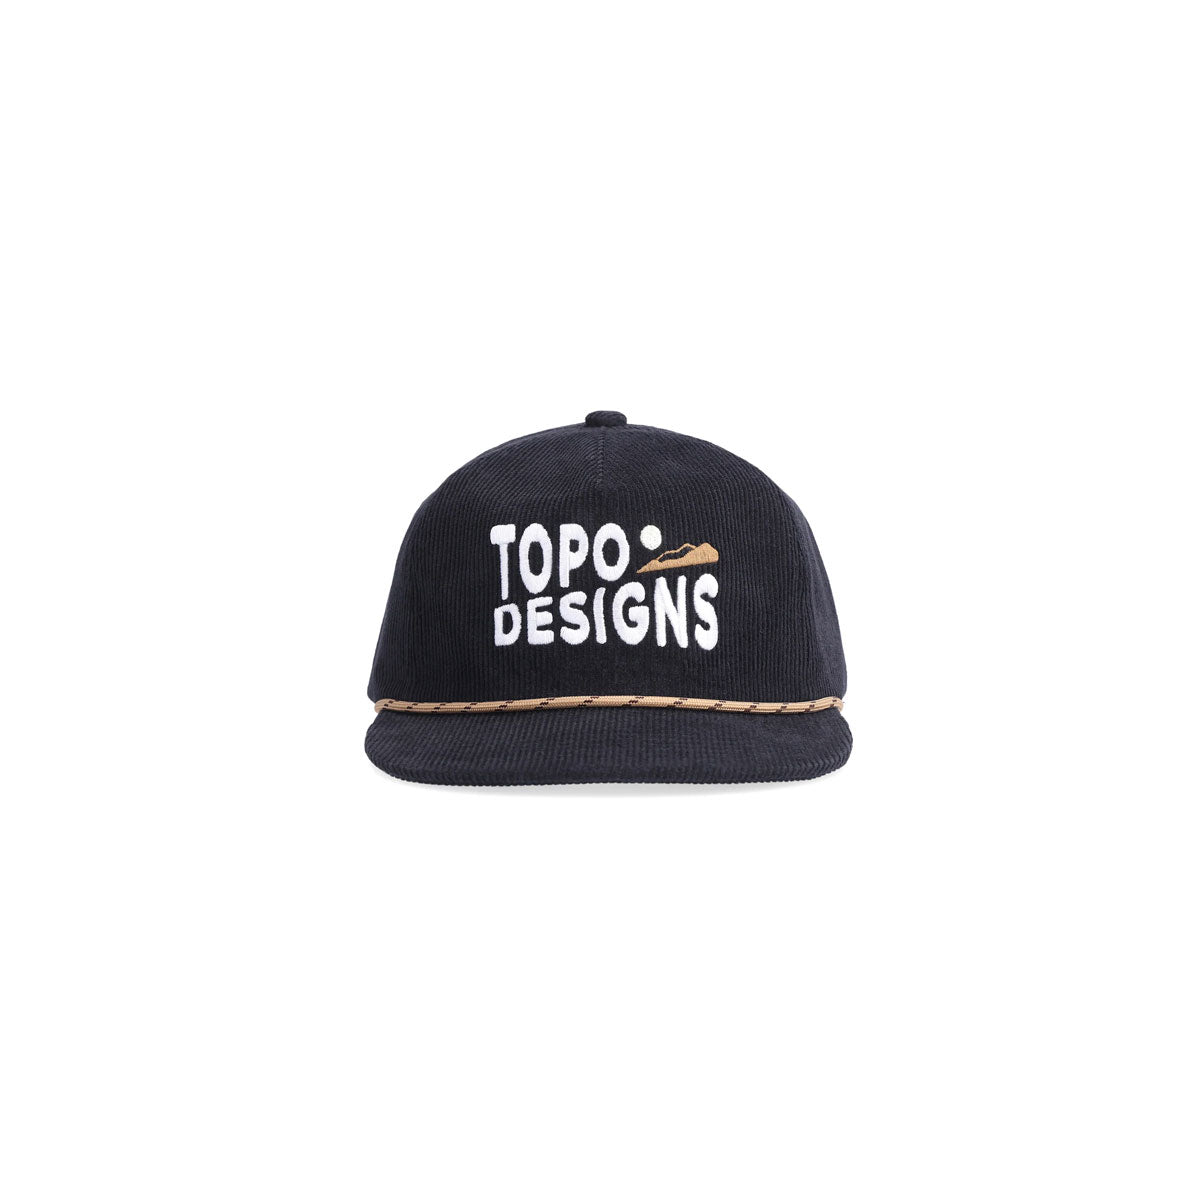 Topo Designs : Corduroy Trucker Hat Sunrise : Black